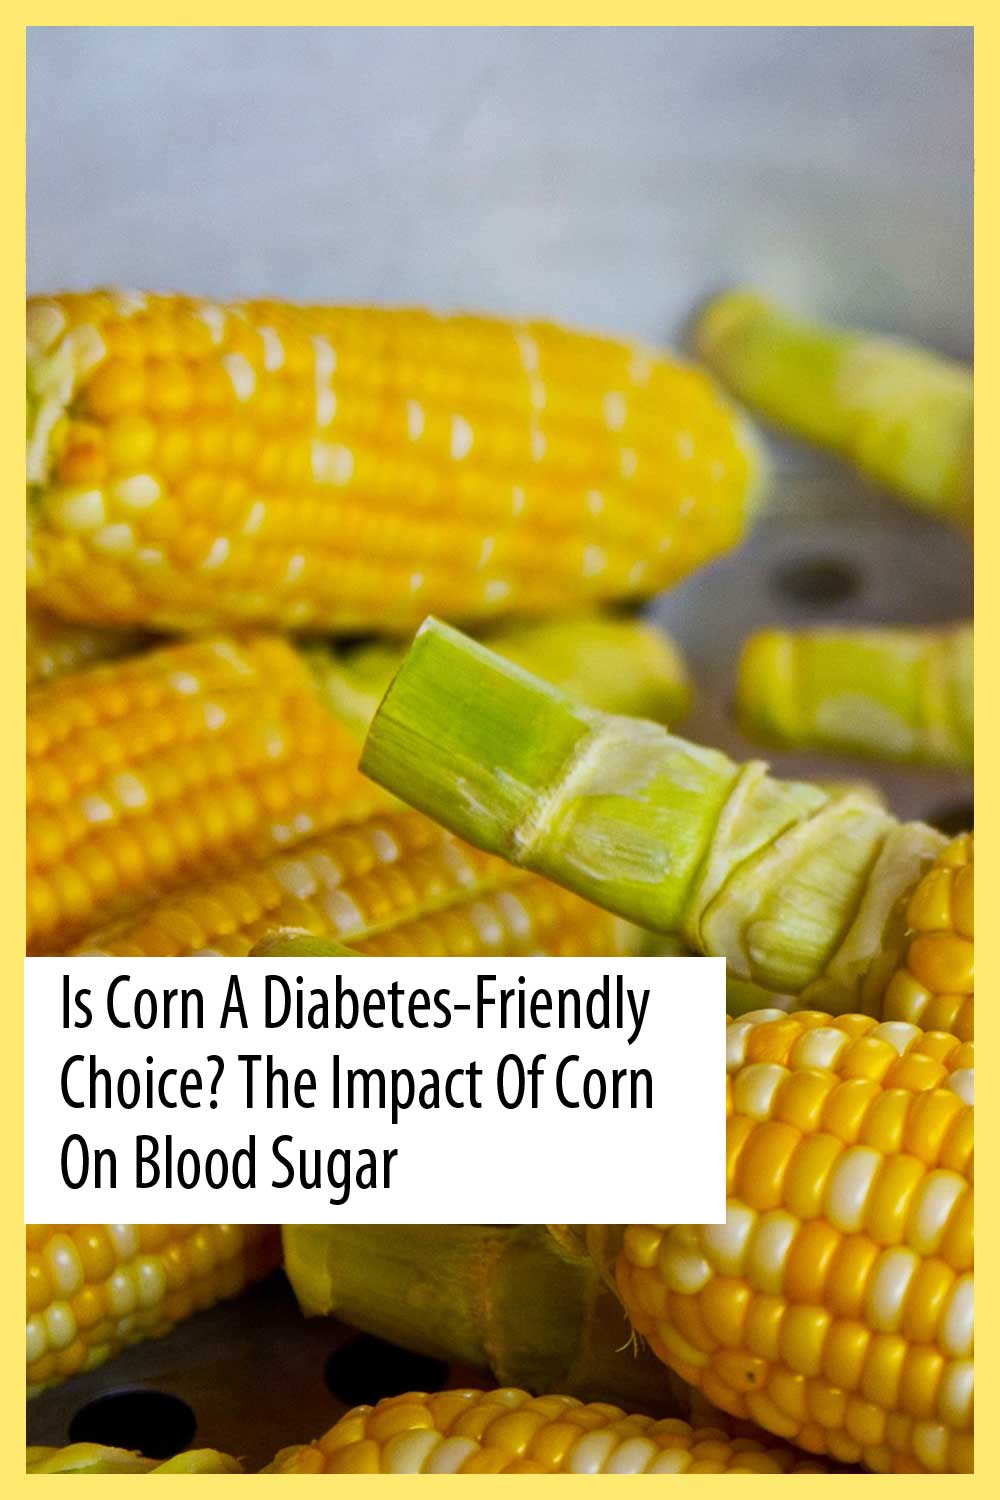 Is Corn a Diabetes-Friendly Choice? The Impact of Corn on Blood Sugar